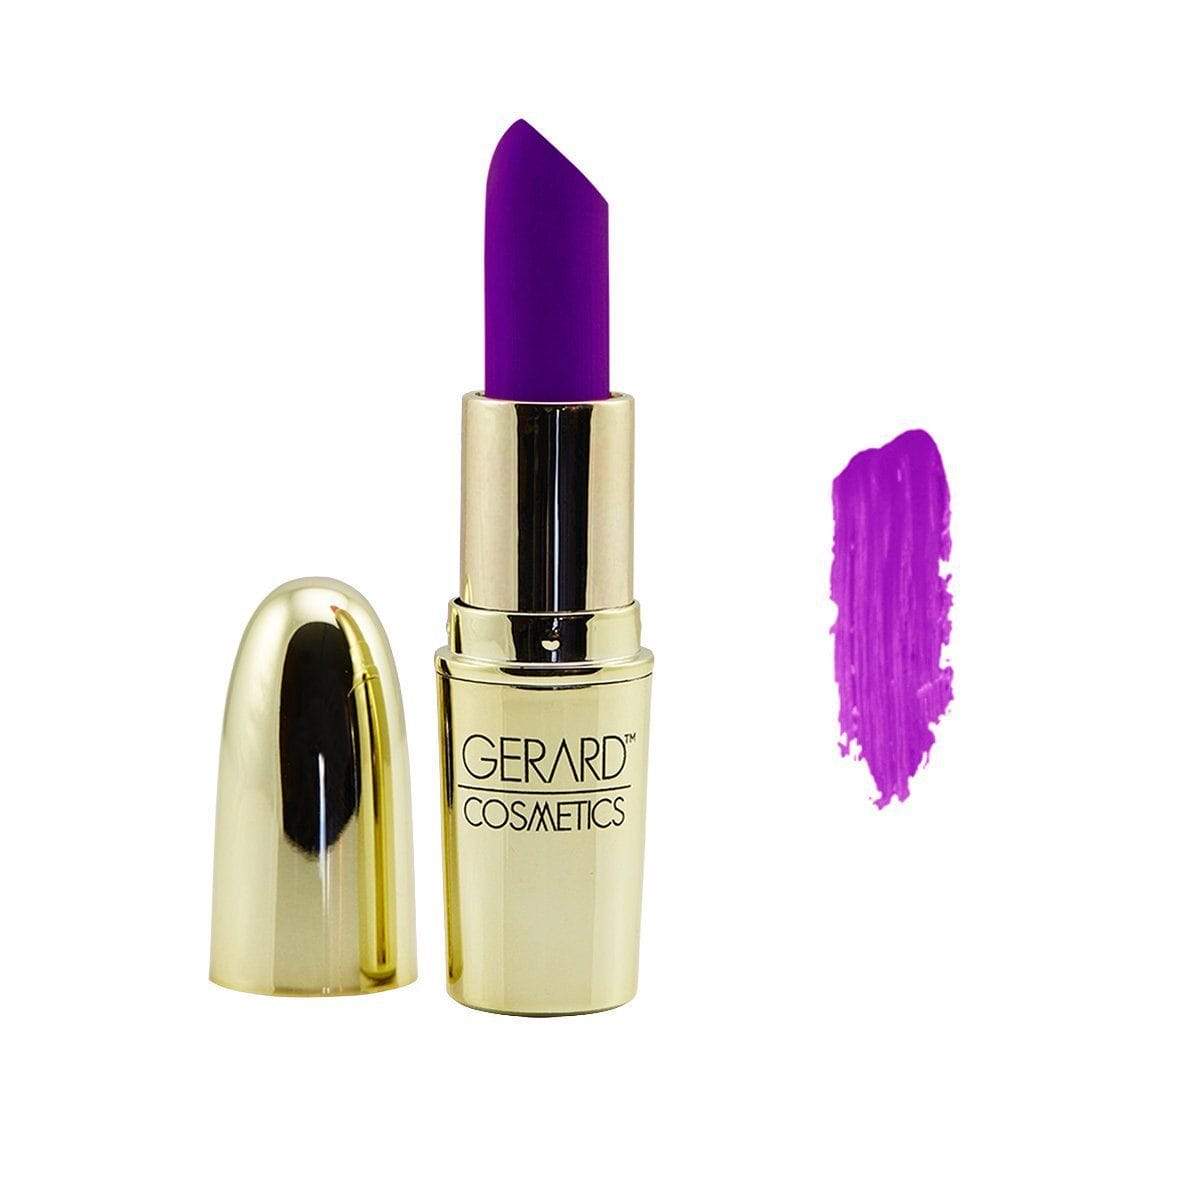 Gerard Cosmetics Lipstick - Grape Soda 4g, lipstick, London Loves Beauty